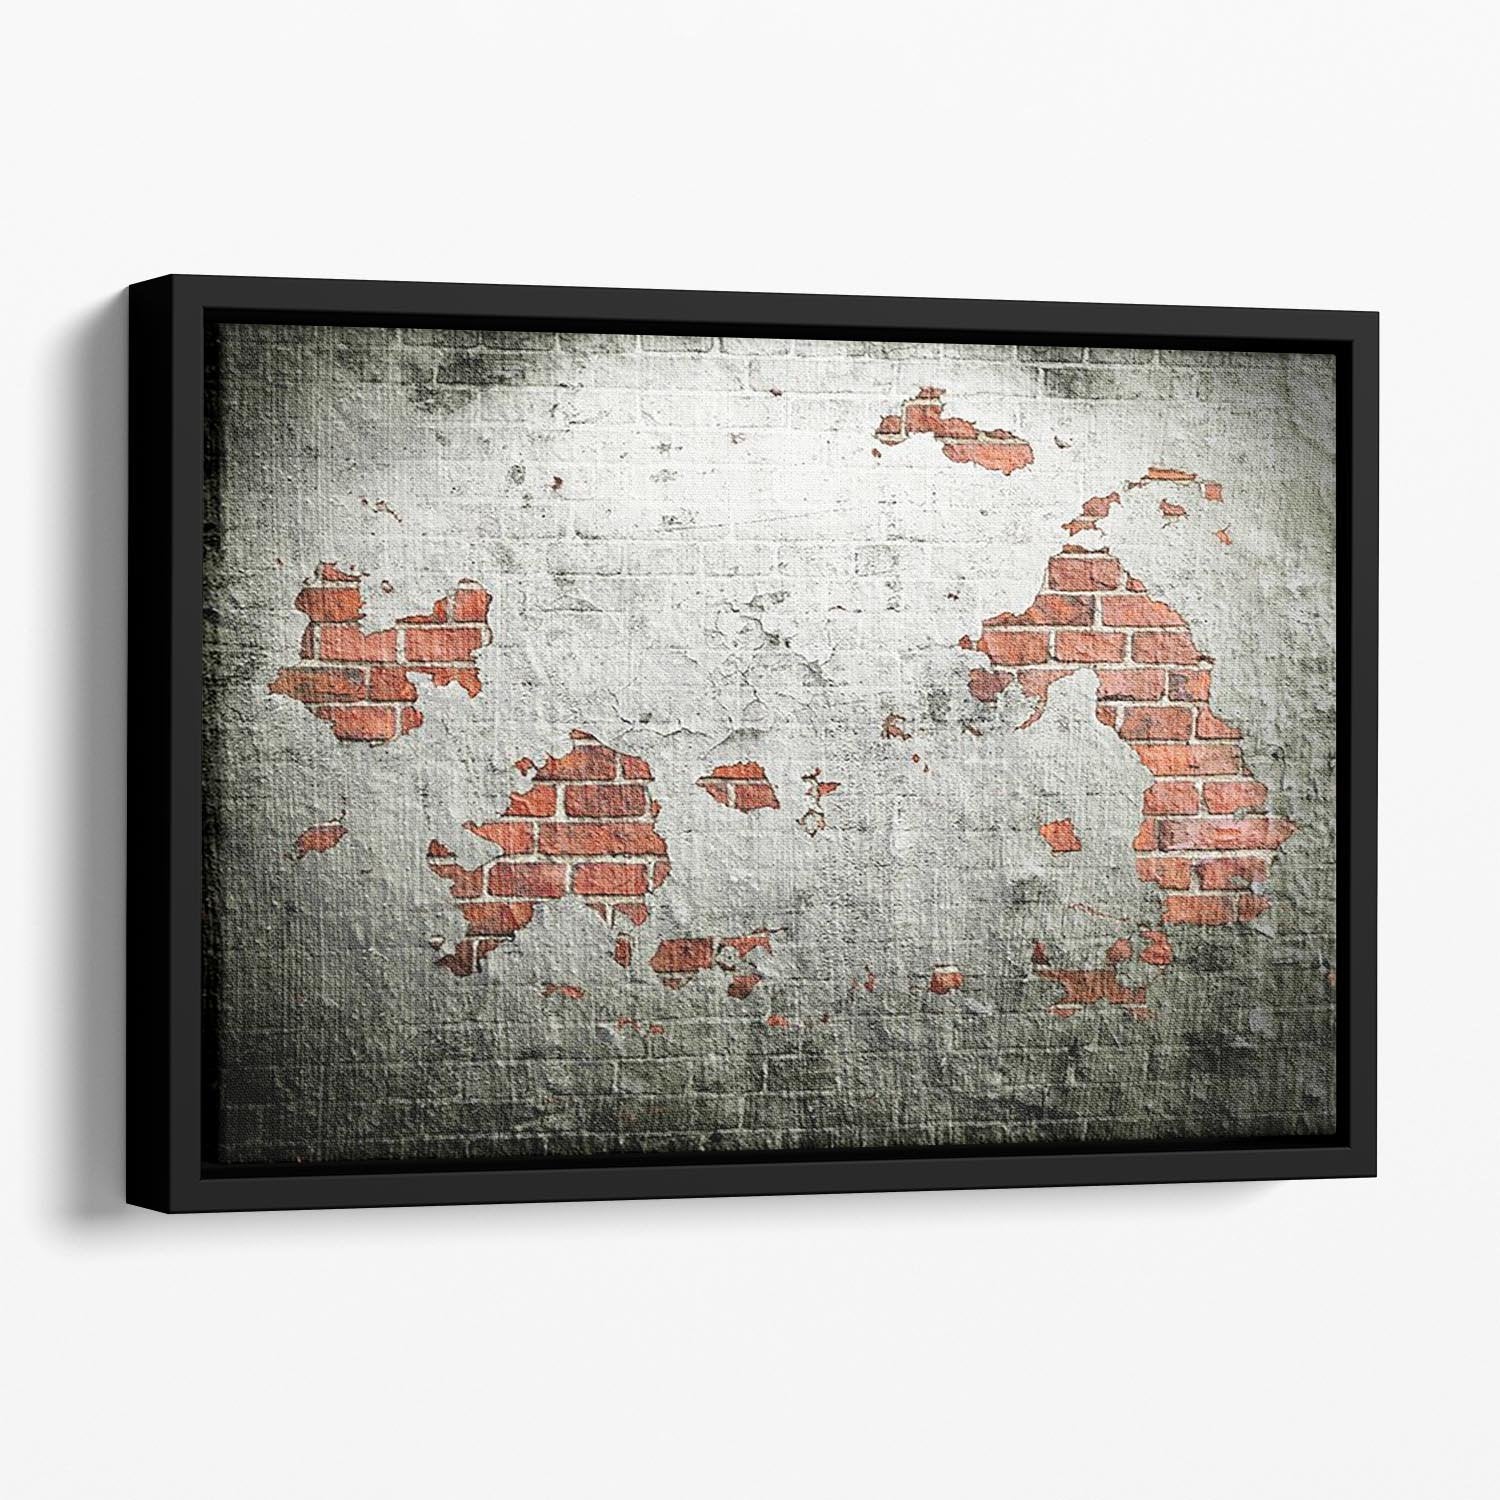 Grunge wall background Floating Framed Canvas - Canvas Art Rocks - 1